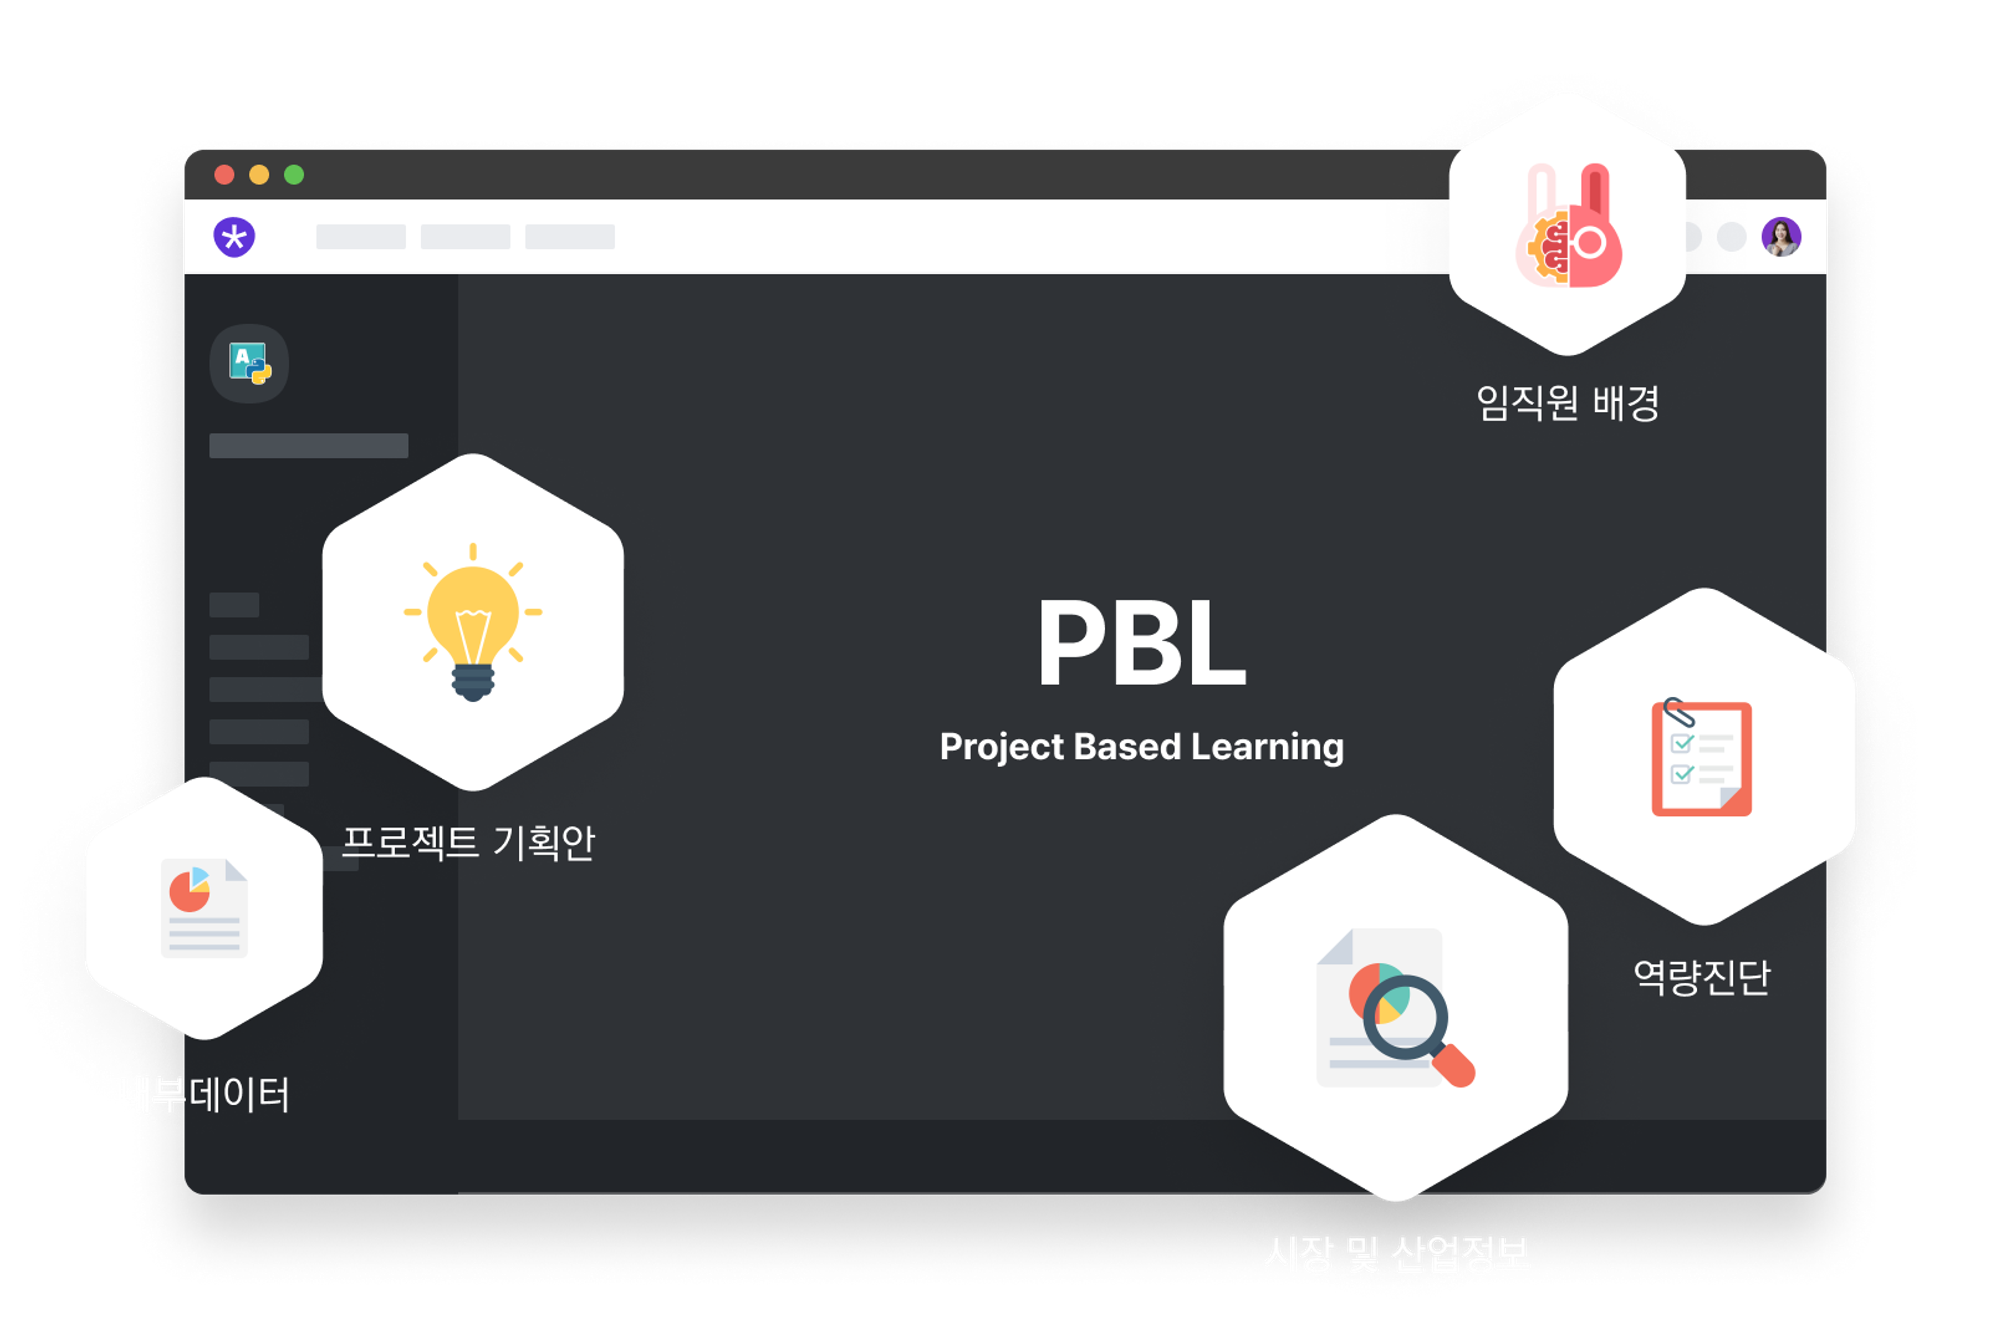 PBL, PBL training, DX training, project-based learning, project training, pedagogy